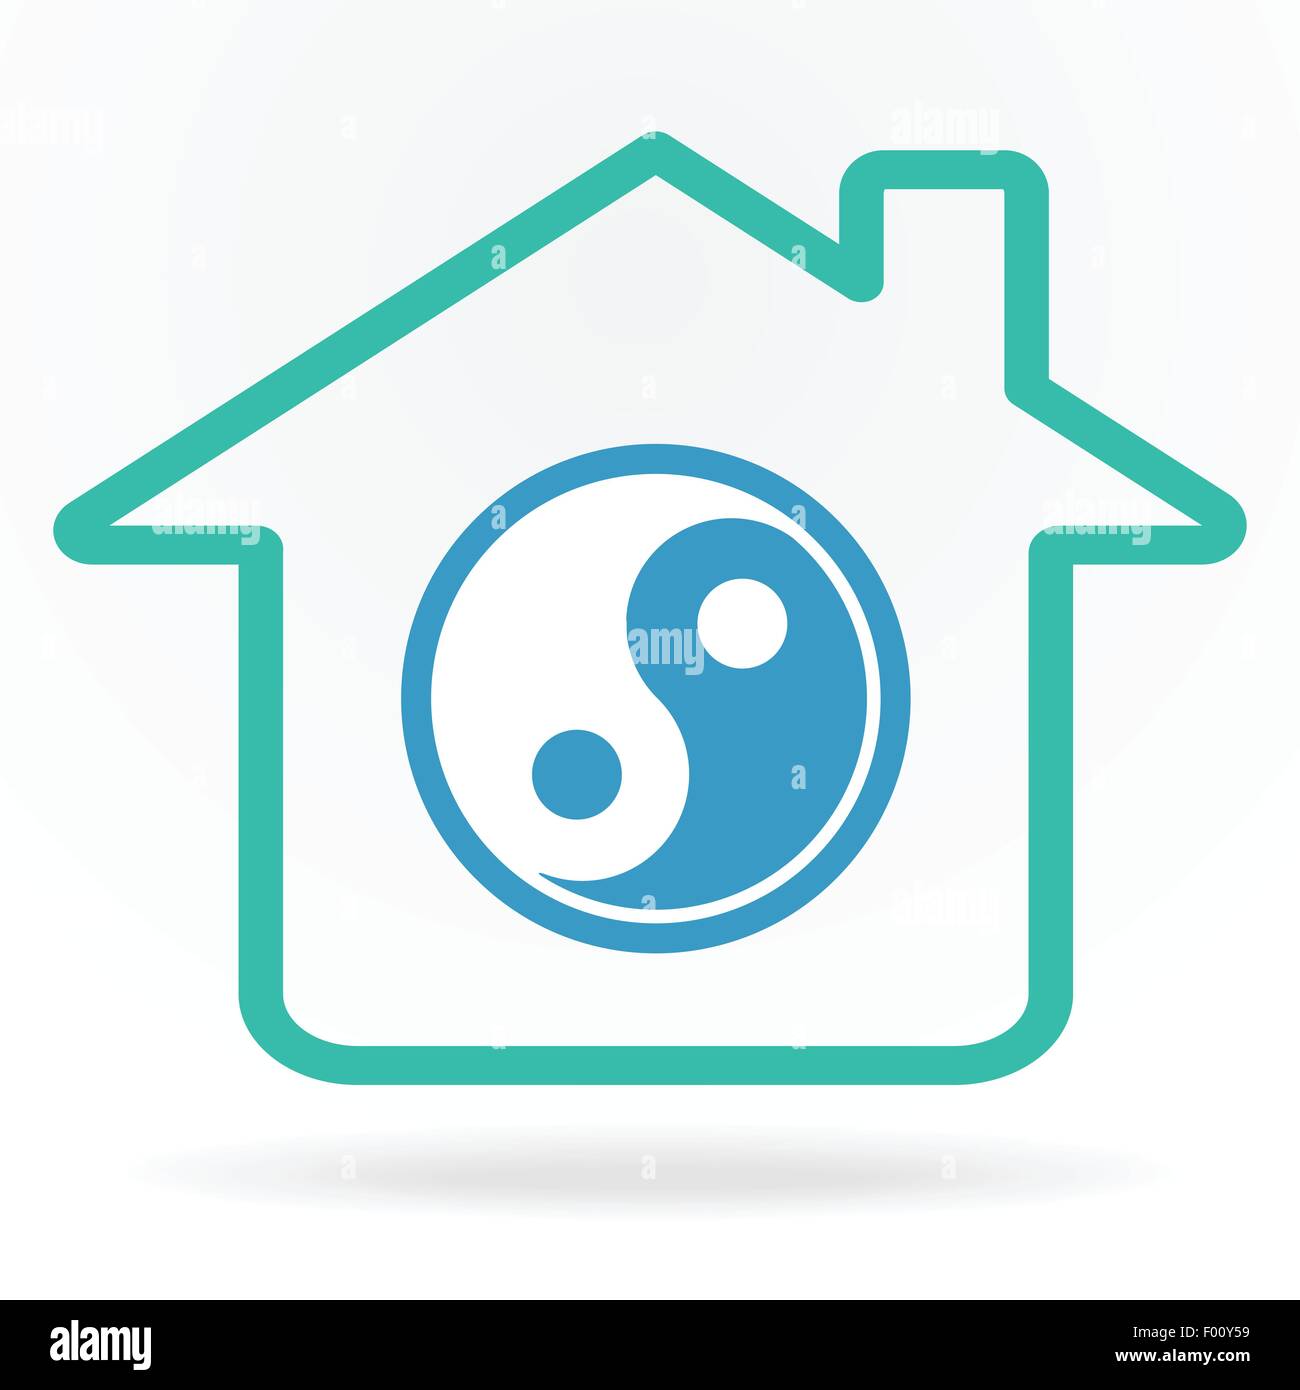 Haus mit Yin-Yang-Symbol als Haus Harmonie-Konzept-Vektor-Illustration. Stock Vektor